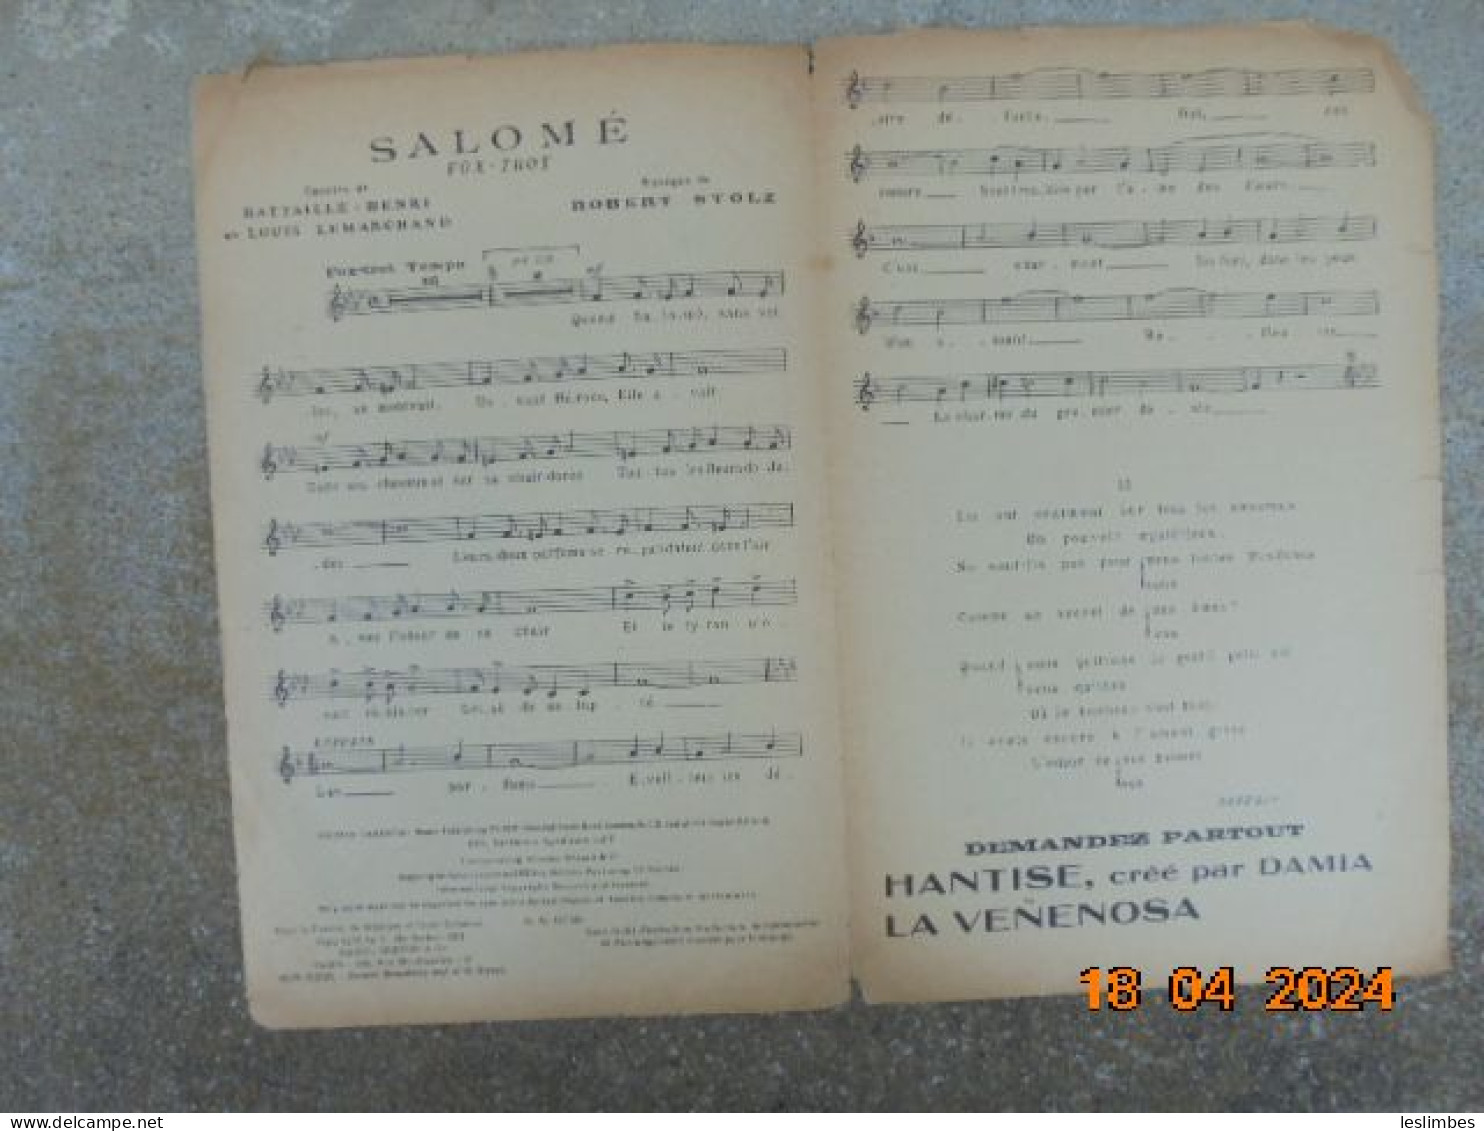 Salome [partition] Fox-Trot - Battaille Henri, Robert Stolz - Raoul Breton & Cie - Partitions Musicales Anciennes